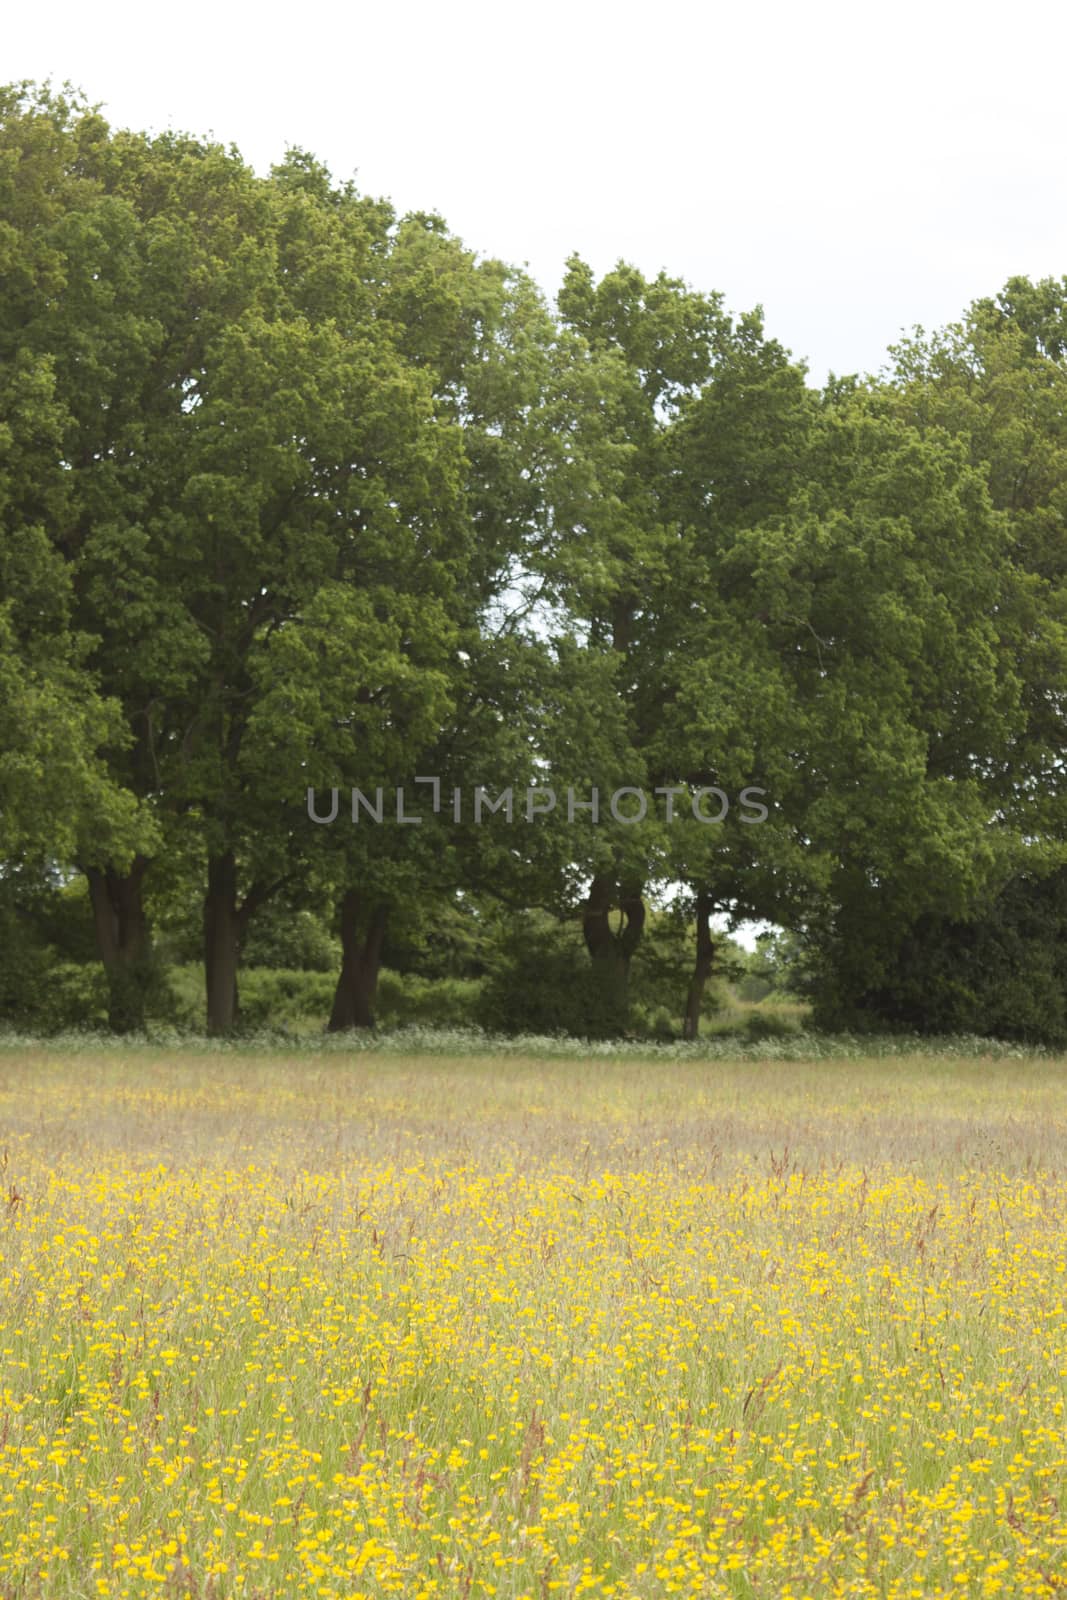 English Countryside, Holmer Green, Buckinghamshire by christopherhall